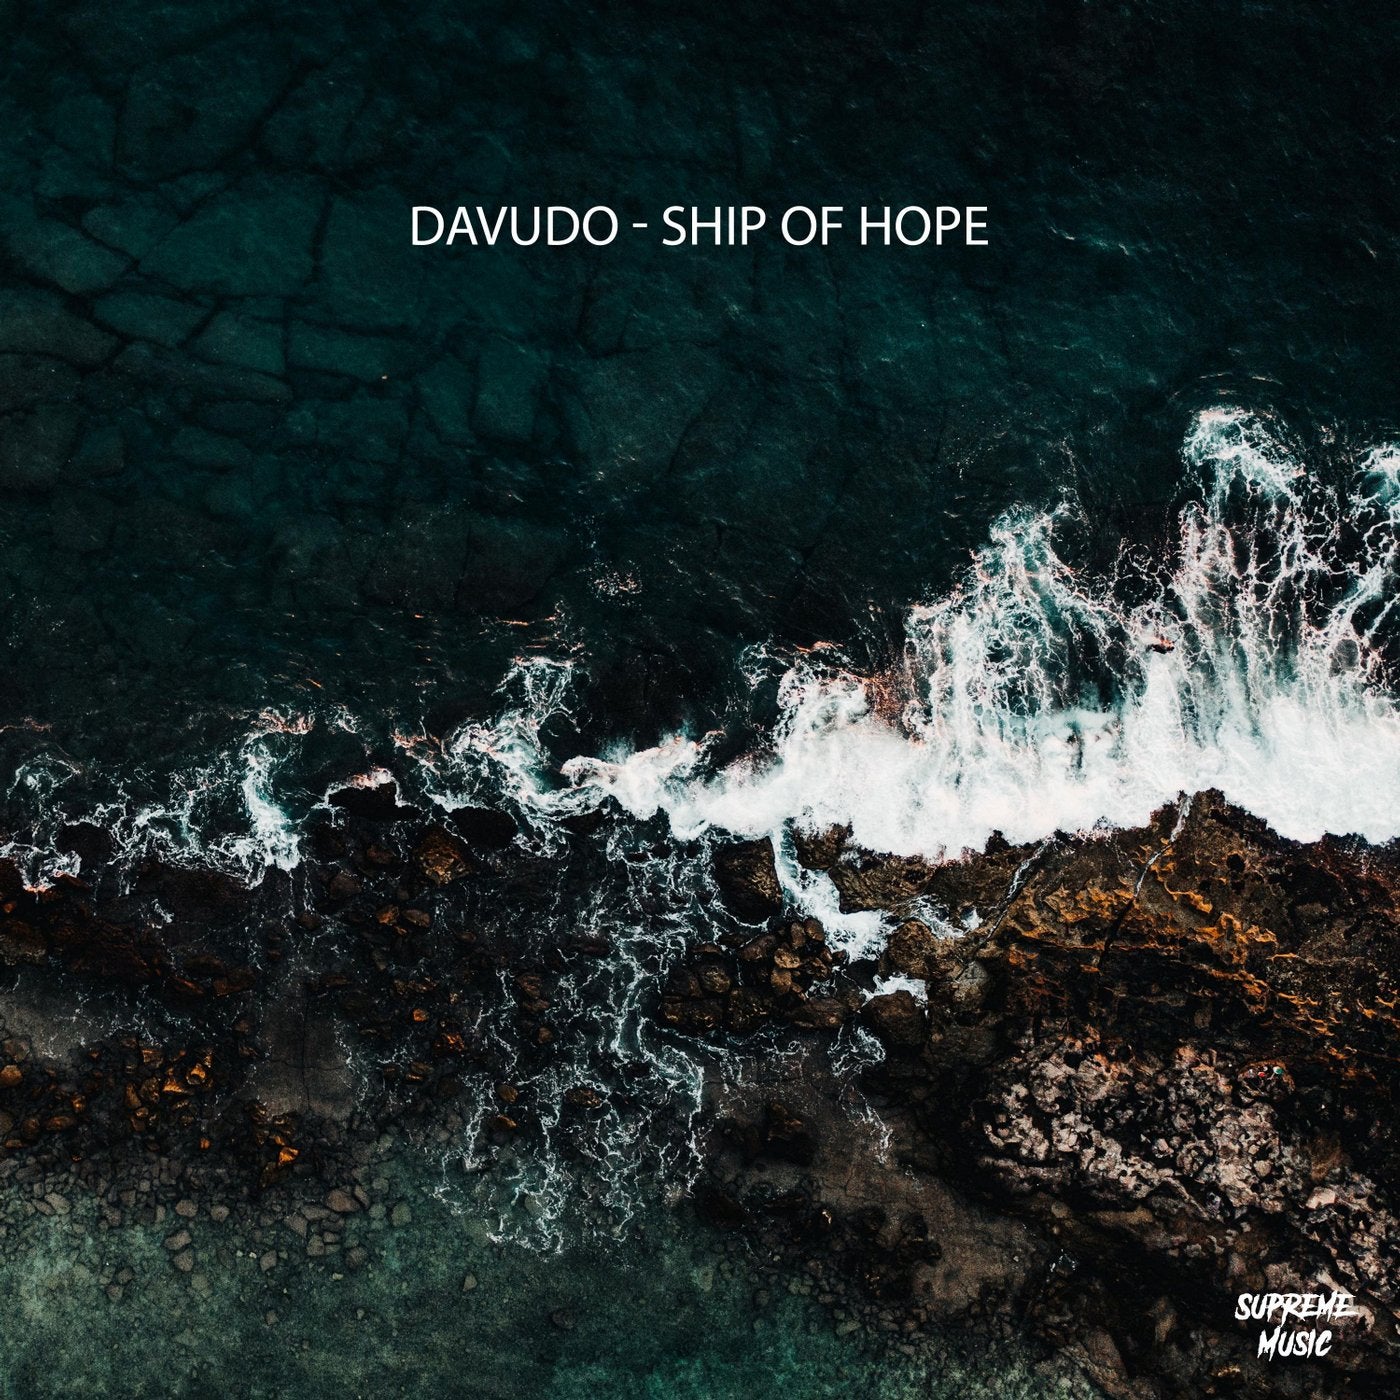 Ship of Hope